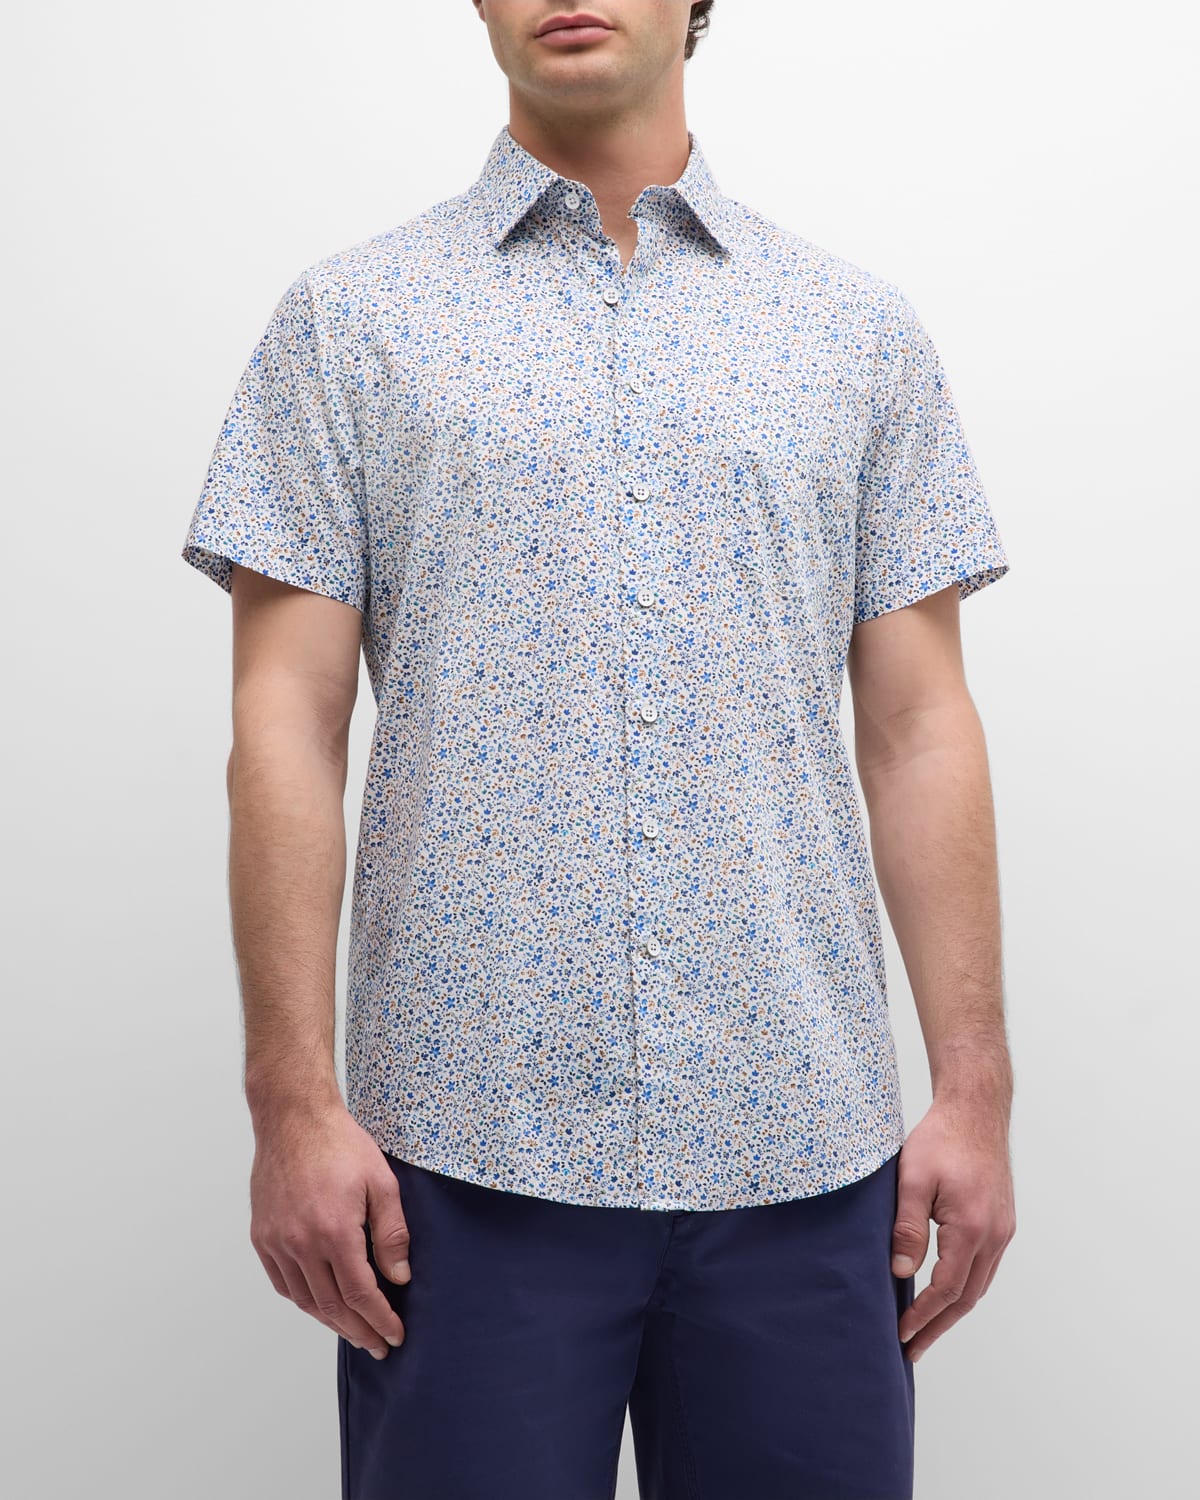 Men's Gale Ditzy Floral Short-Sleeve Shirt